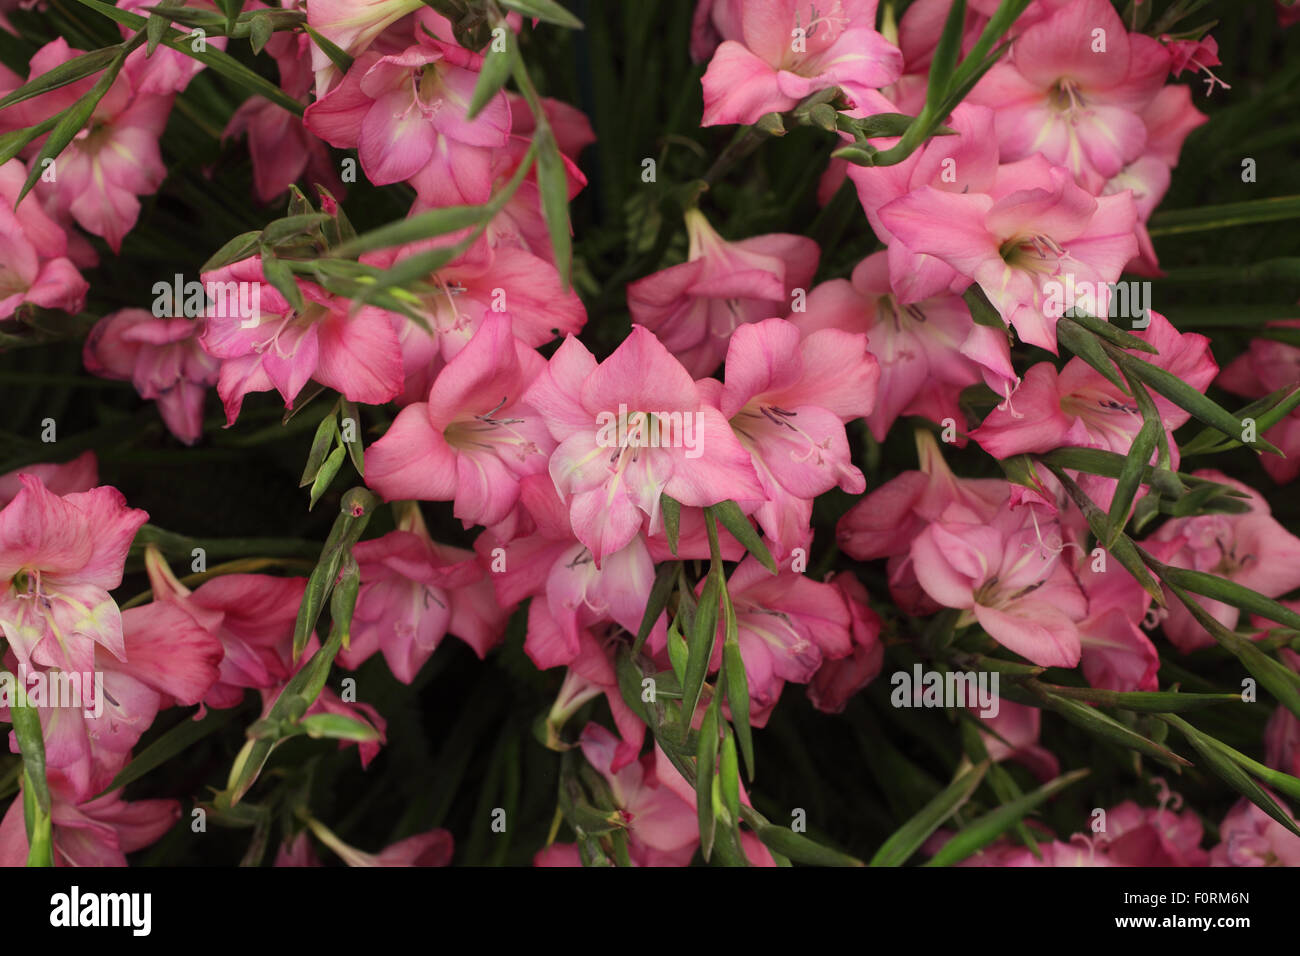 Nanus Gladiolus 'Charm' close up of flowers Stock Photo